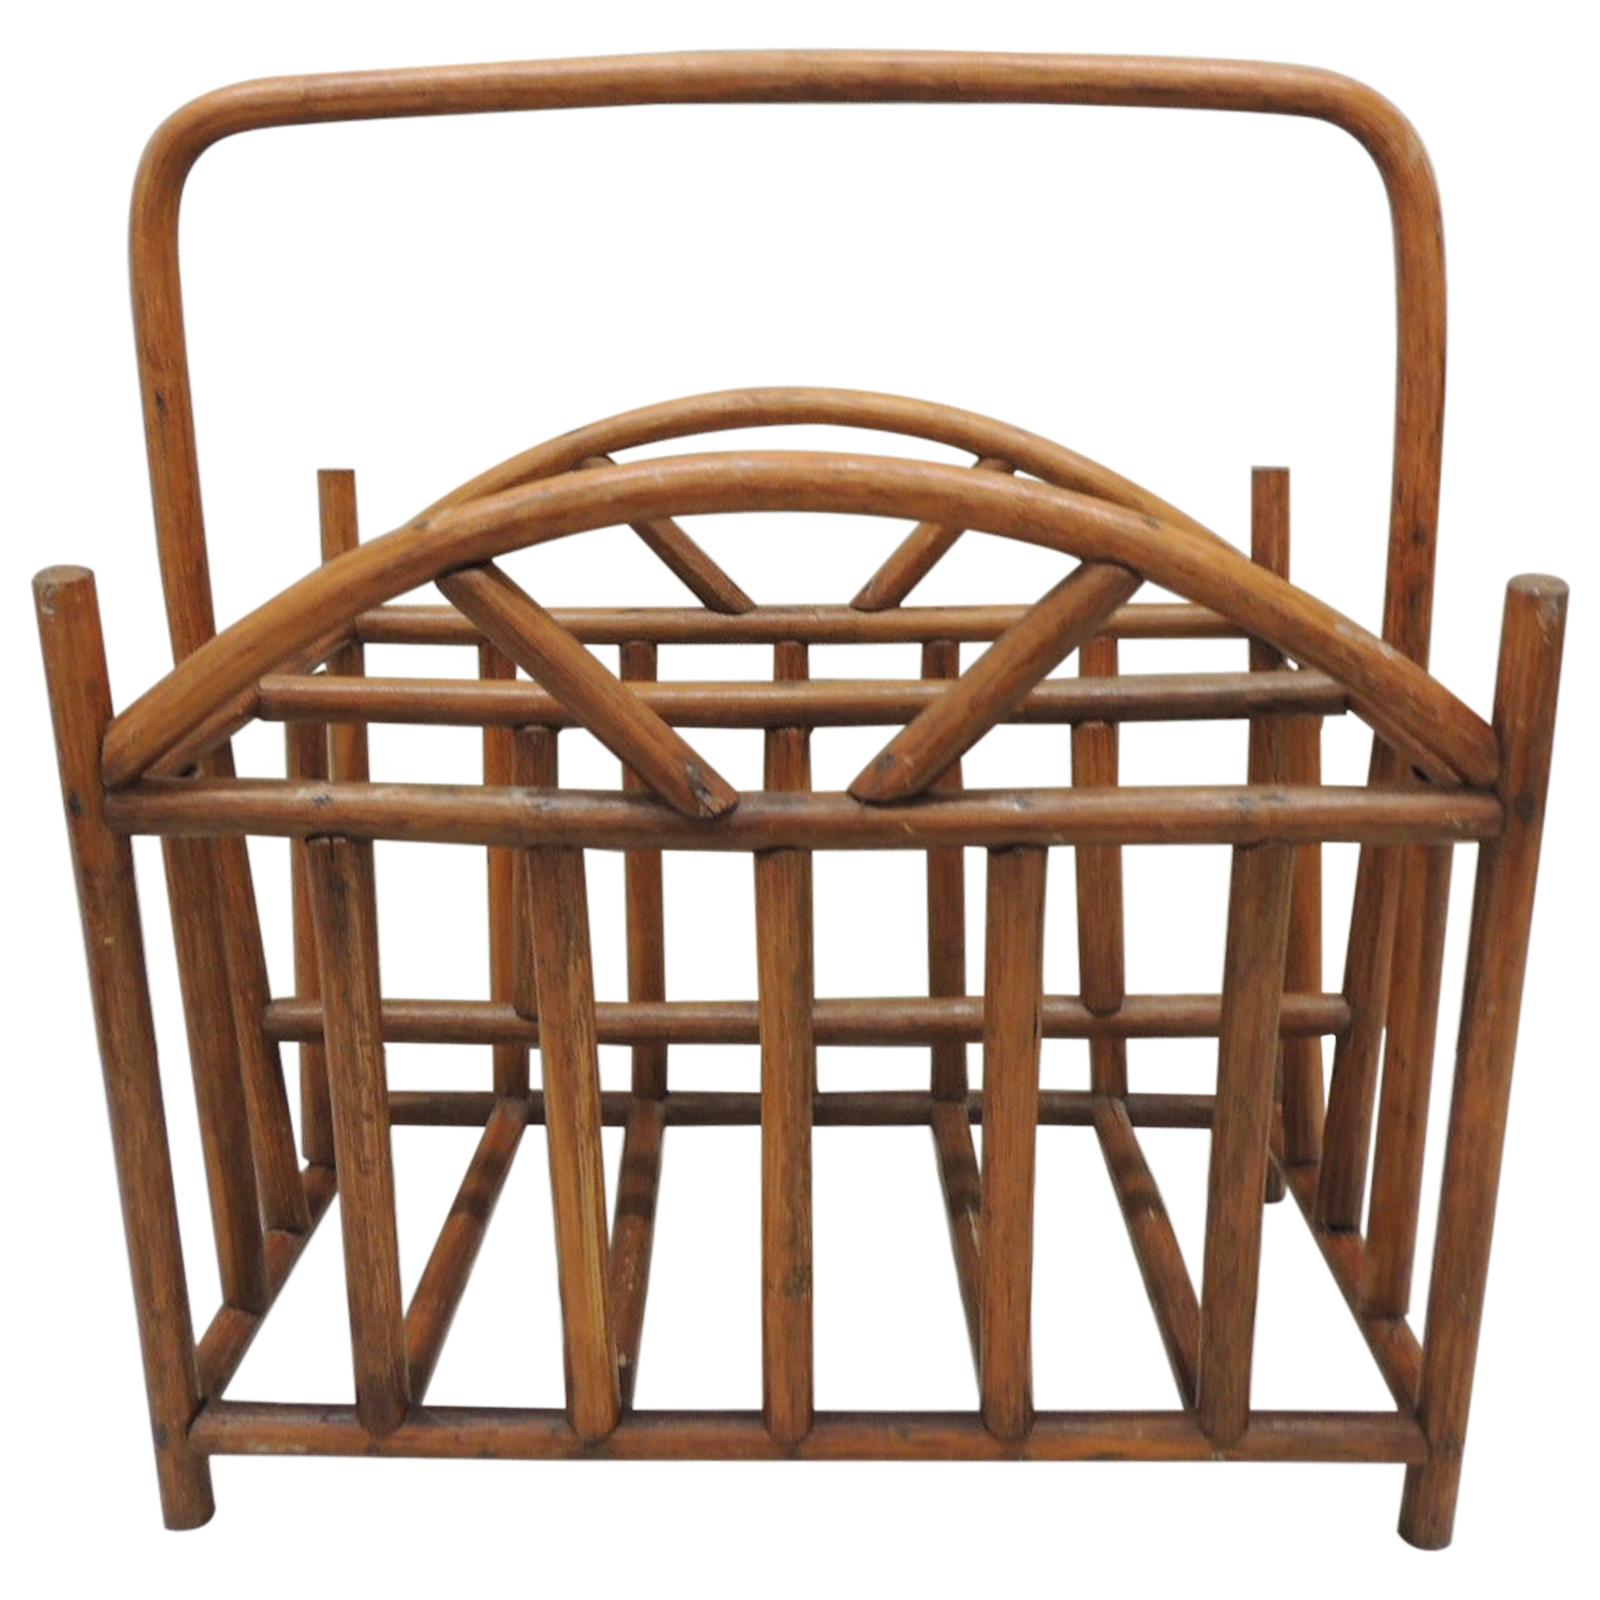 Vintage Bent Wood Artisanal Magazine Rack or Stand